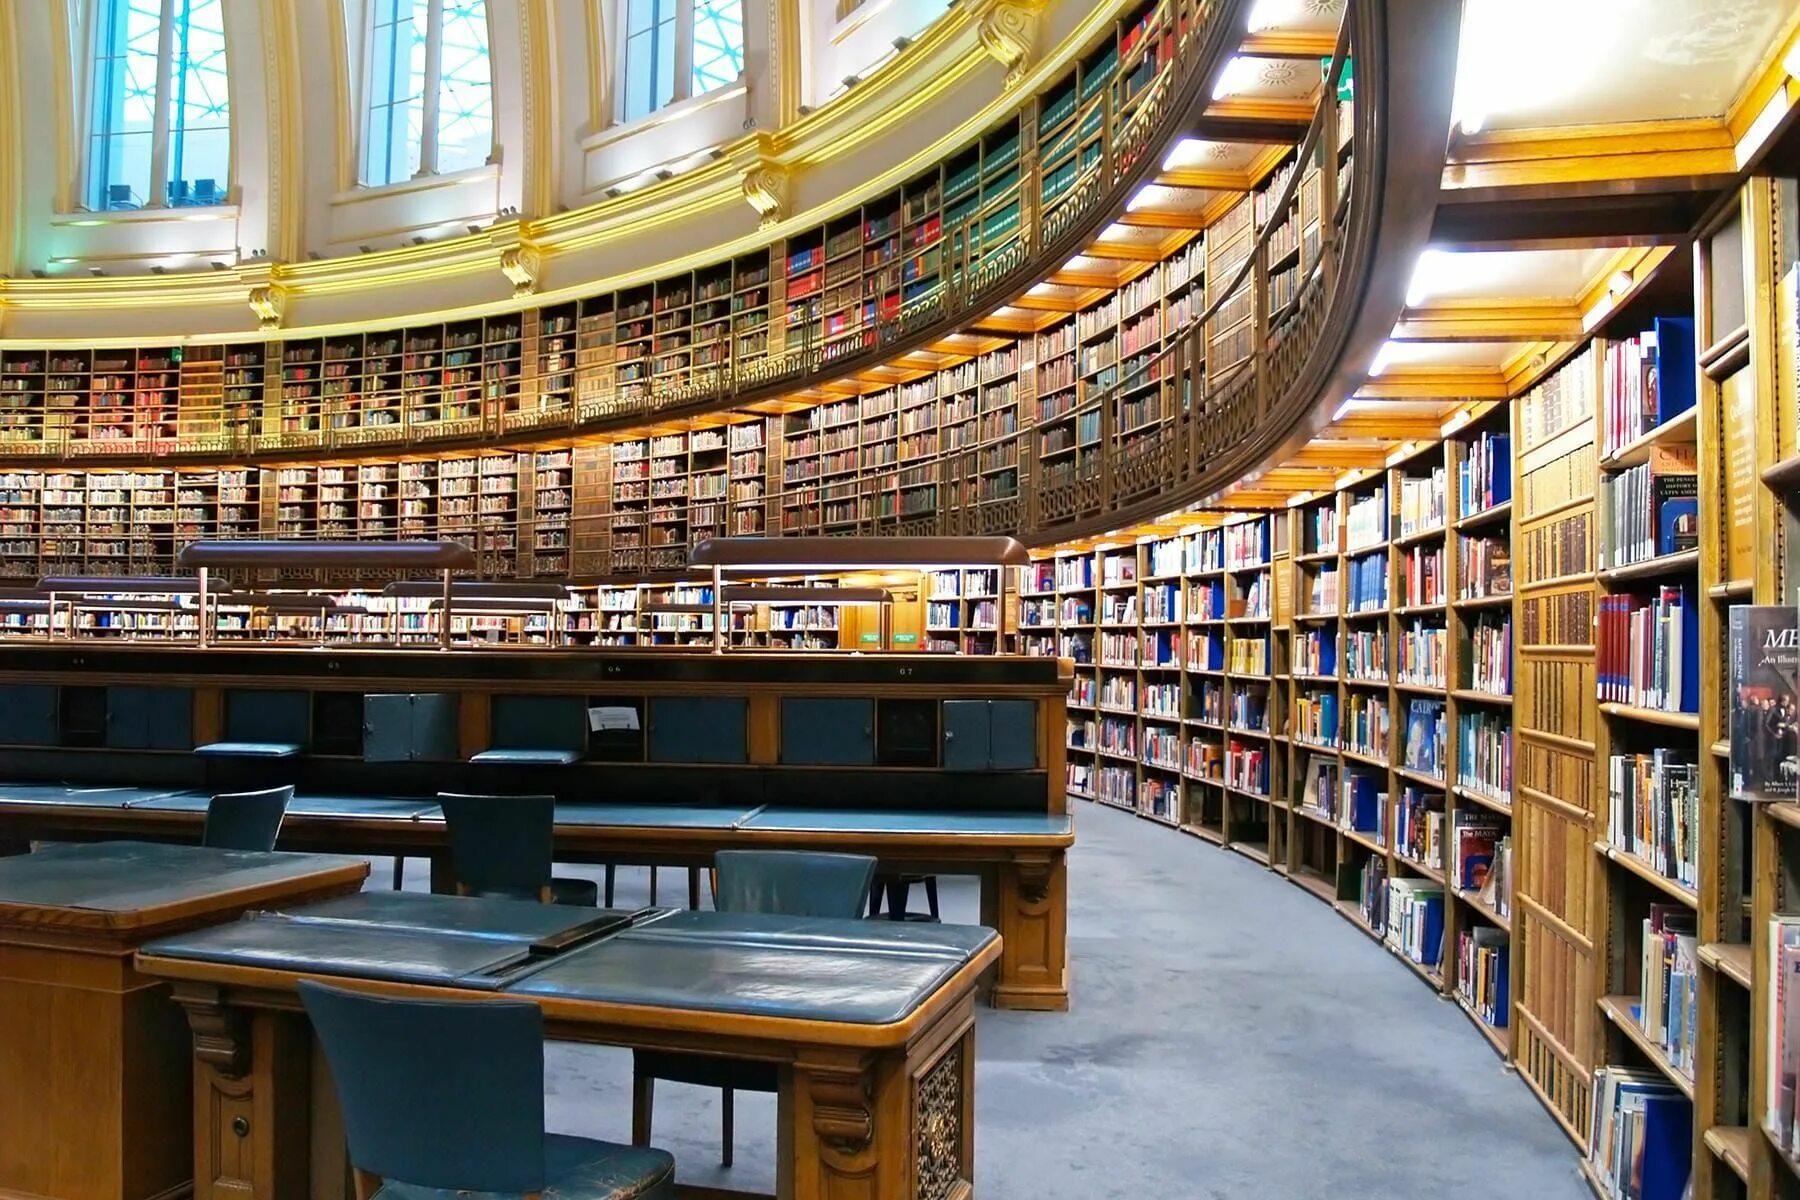 This is our library. Библиотека британского музея. Библиотека британского музея в Лондоне. Библиотека в Мюнхене. Баварская государственная библиотека в Мюнхене.